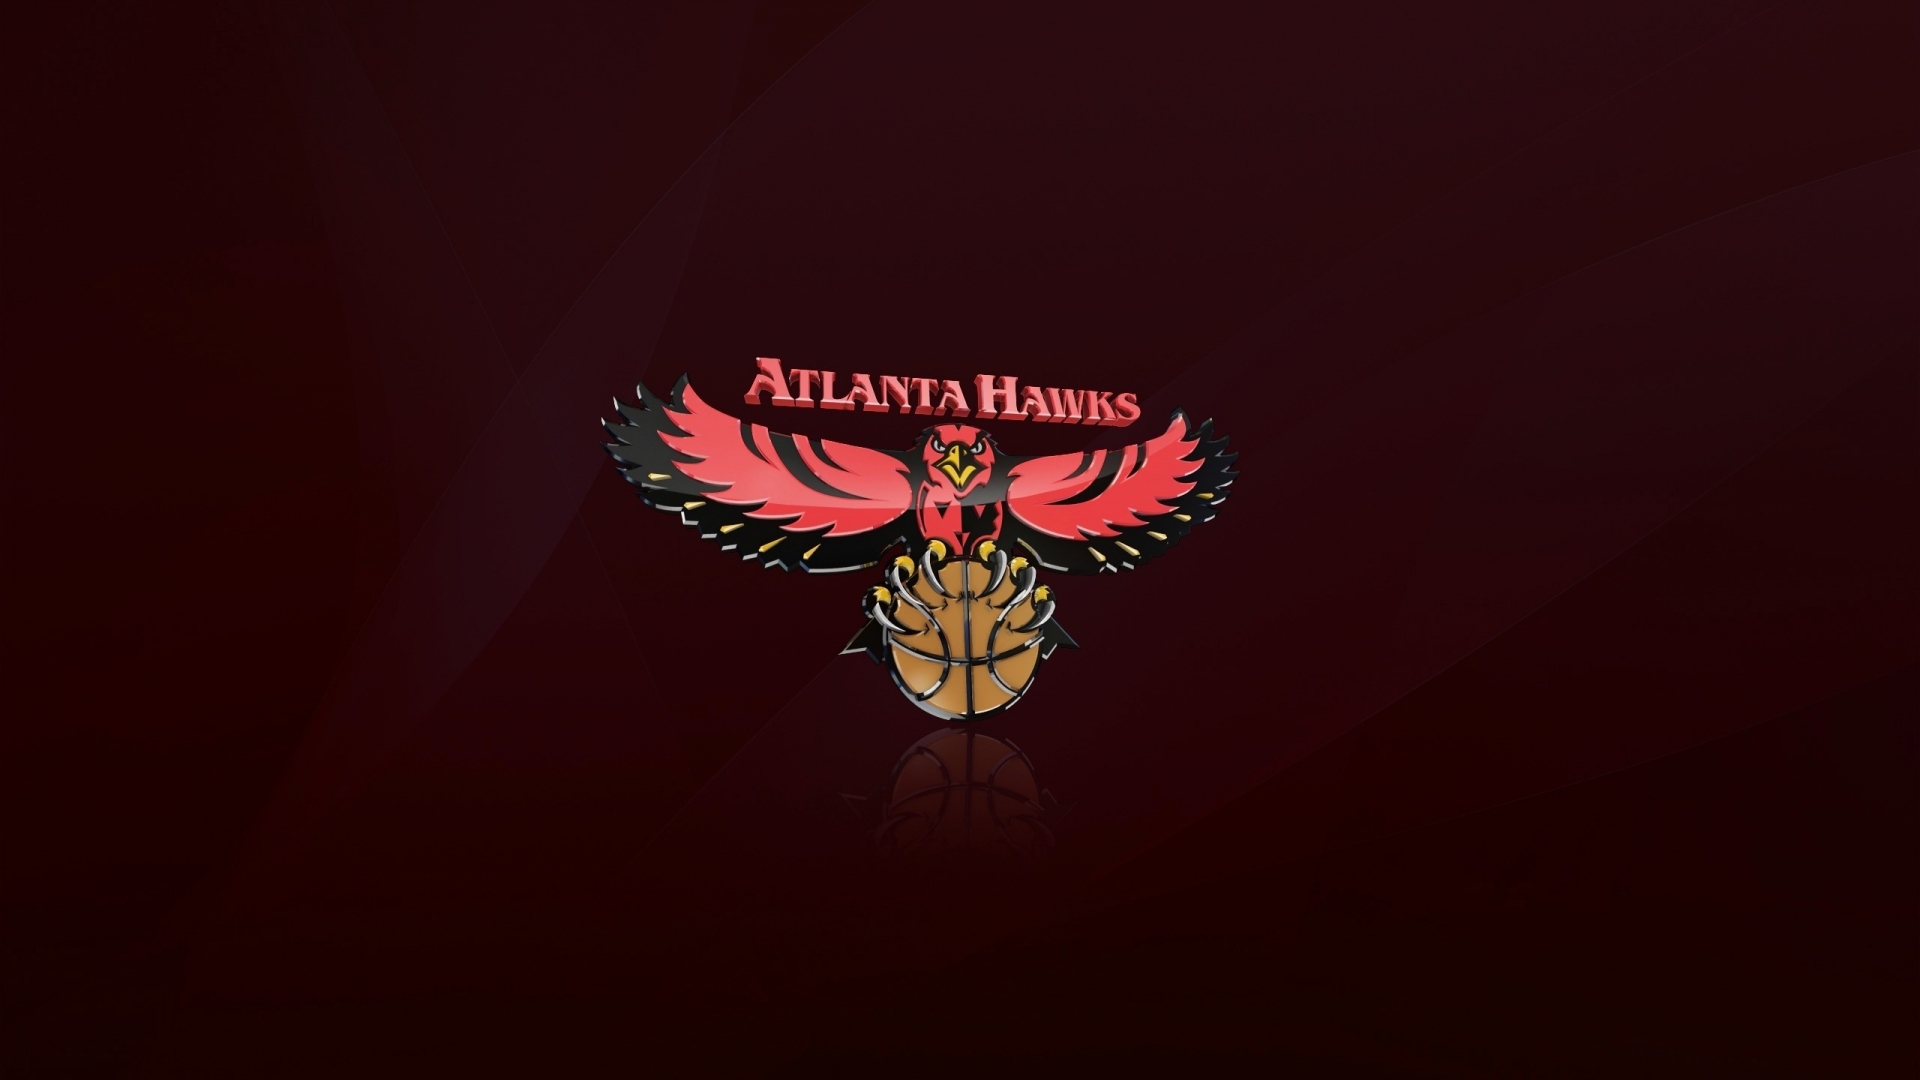 Atlanta Hawks Logo for 1920 x 1080 HDTV 1080p resolution